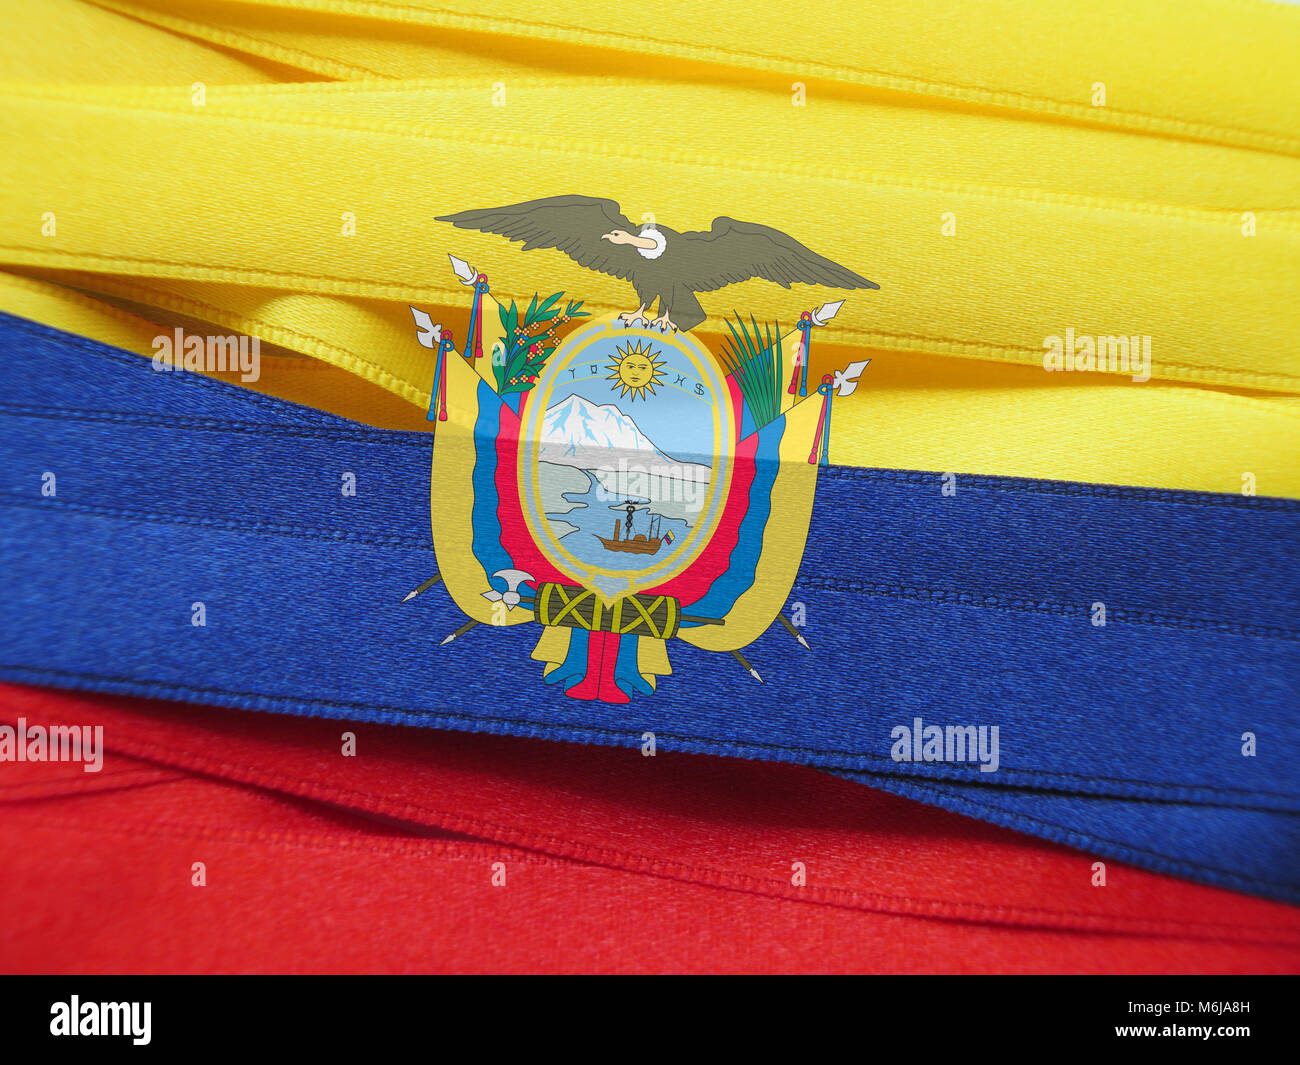 Bandera ecuador cinta fotografías e imágenes de alta resolución - Alamy